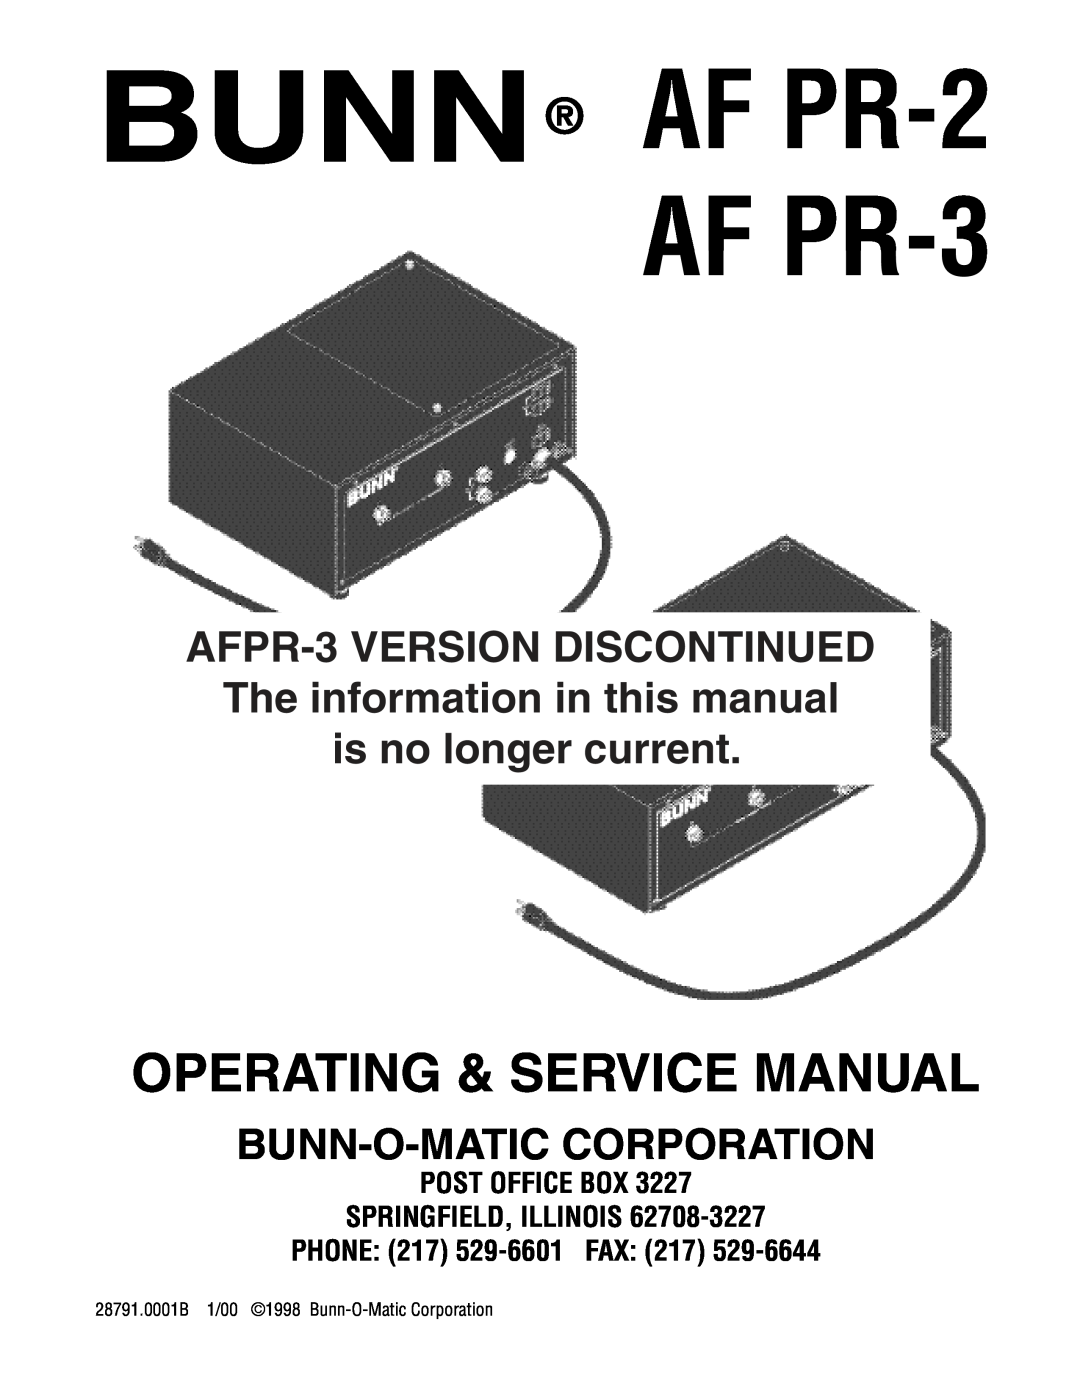 Bunn service manual BUNN AF PR-2AF PR-3, AFPR-3VERSION DISCONTINUED, Bunn-O-Maticcorporation, PHONE 217 529-6601FAX 